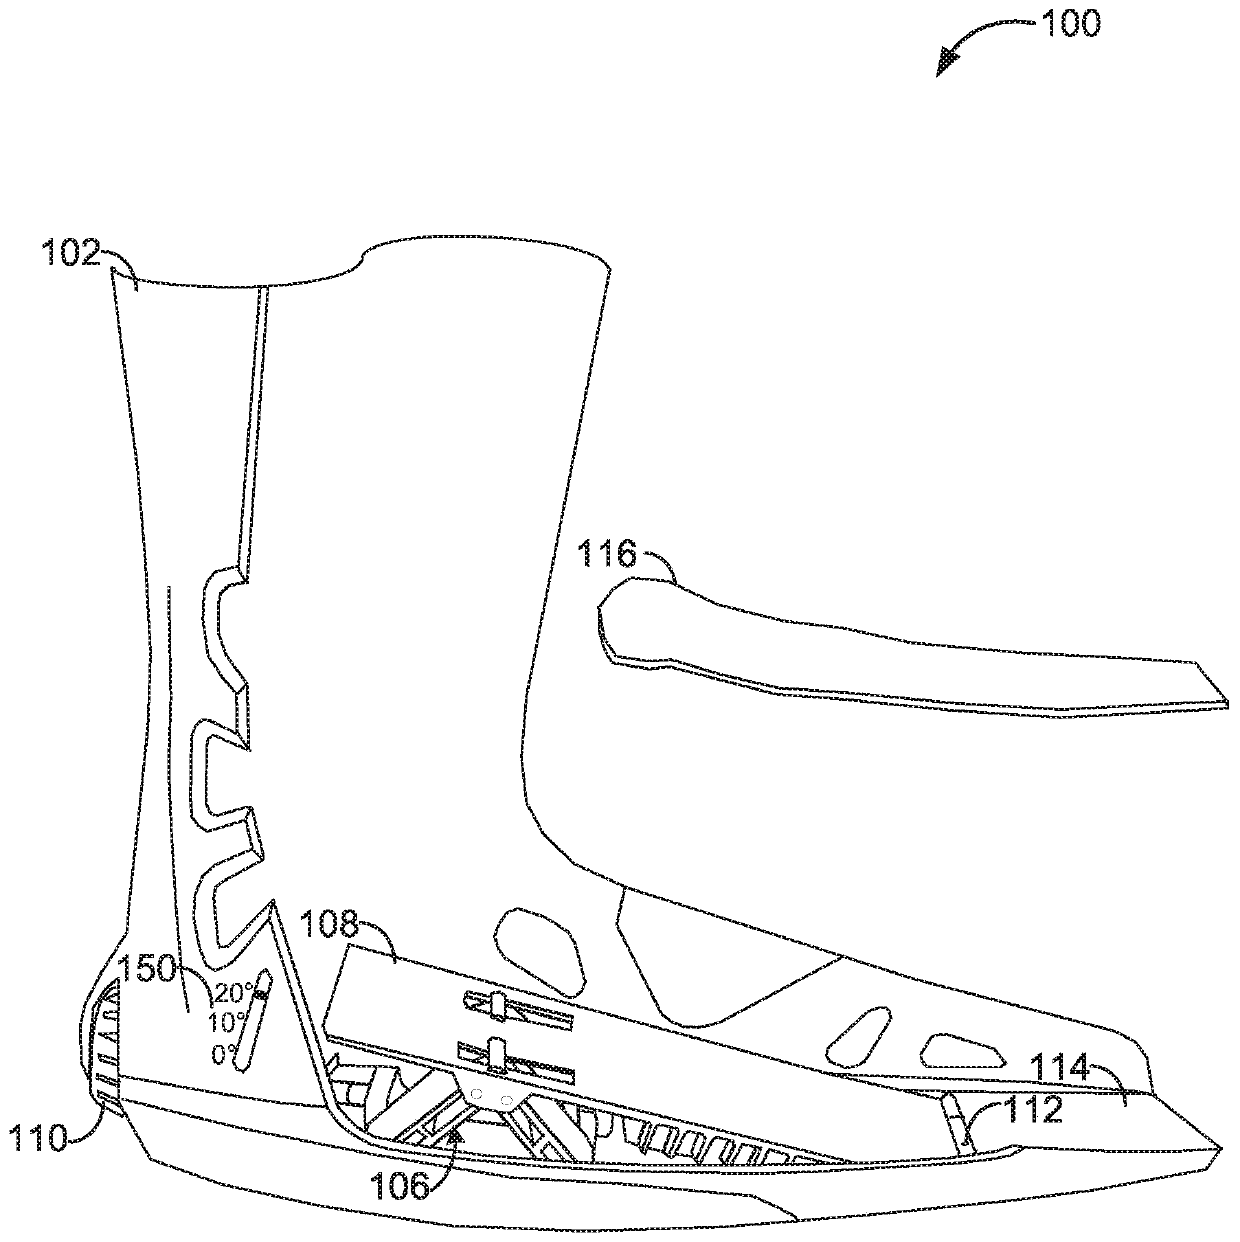 Orthopedic walking boot having a mechanically adjustable ramp insert